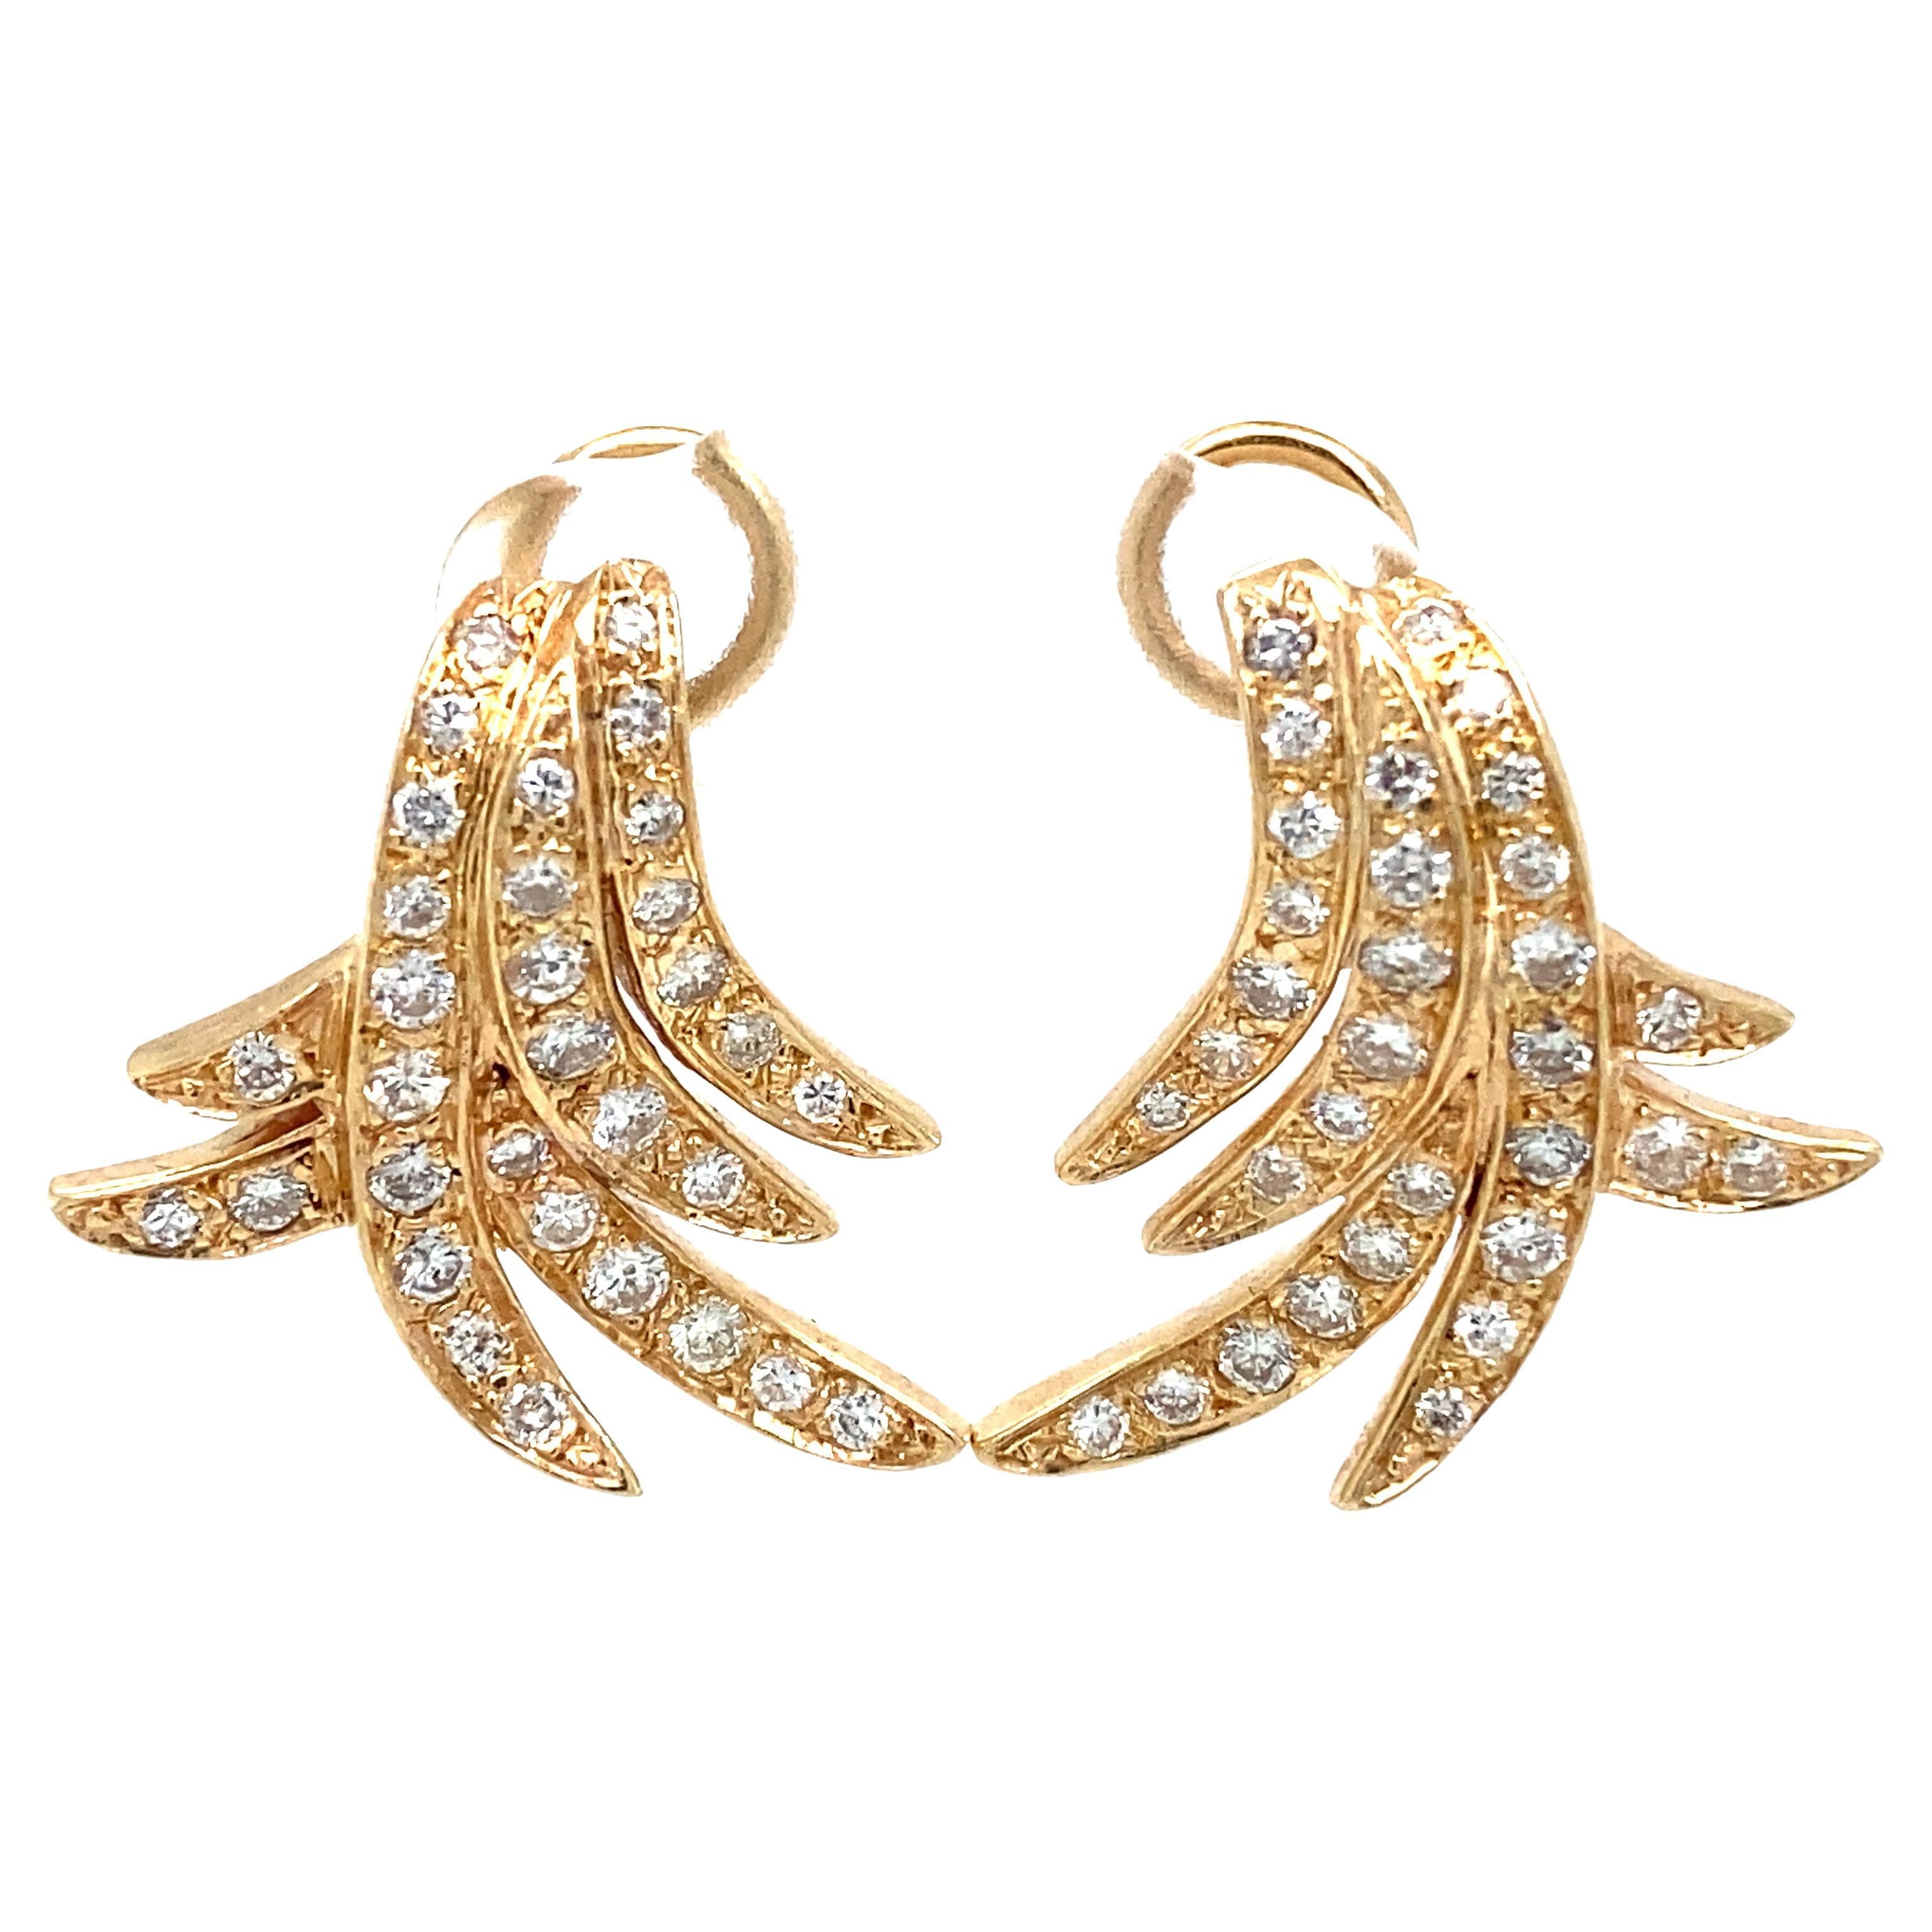 Enrique Pascual Diamond Feather Earrings in 14 Karat Yellow Gold